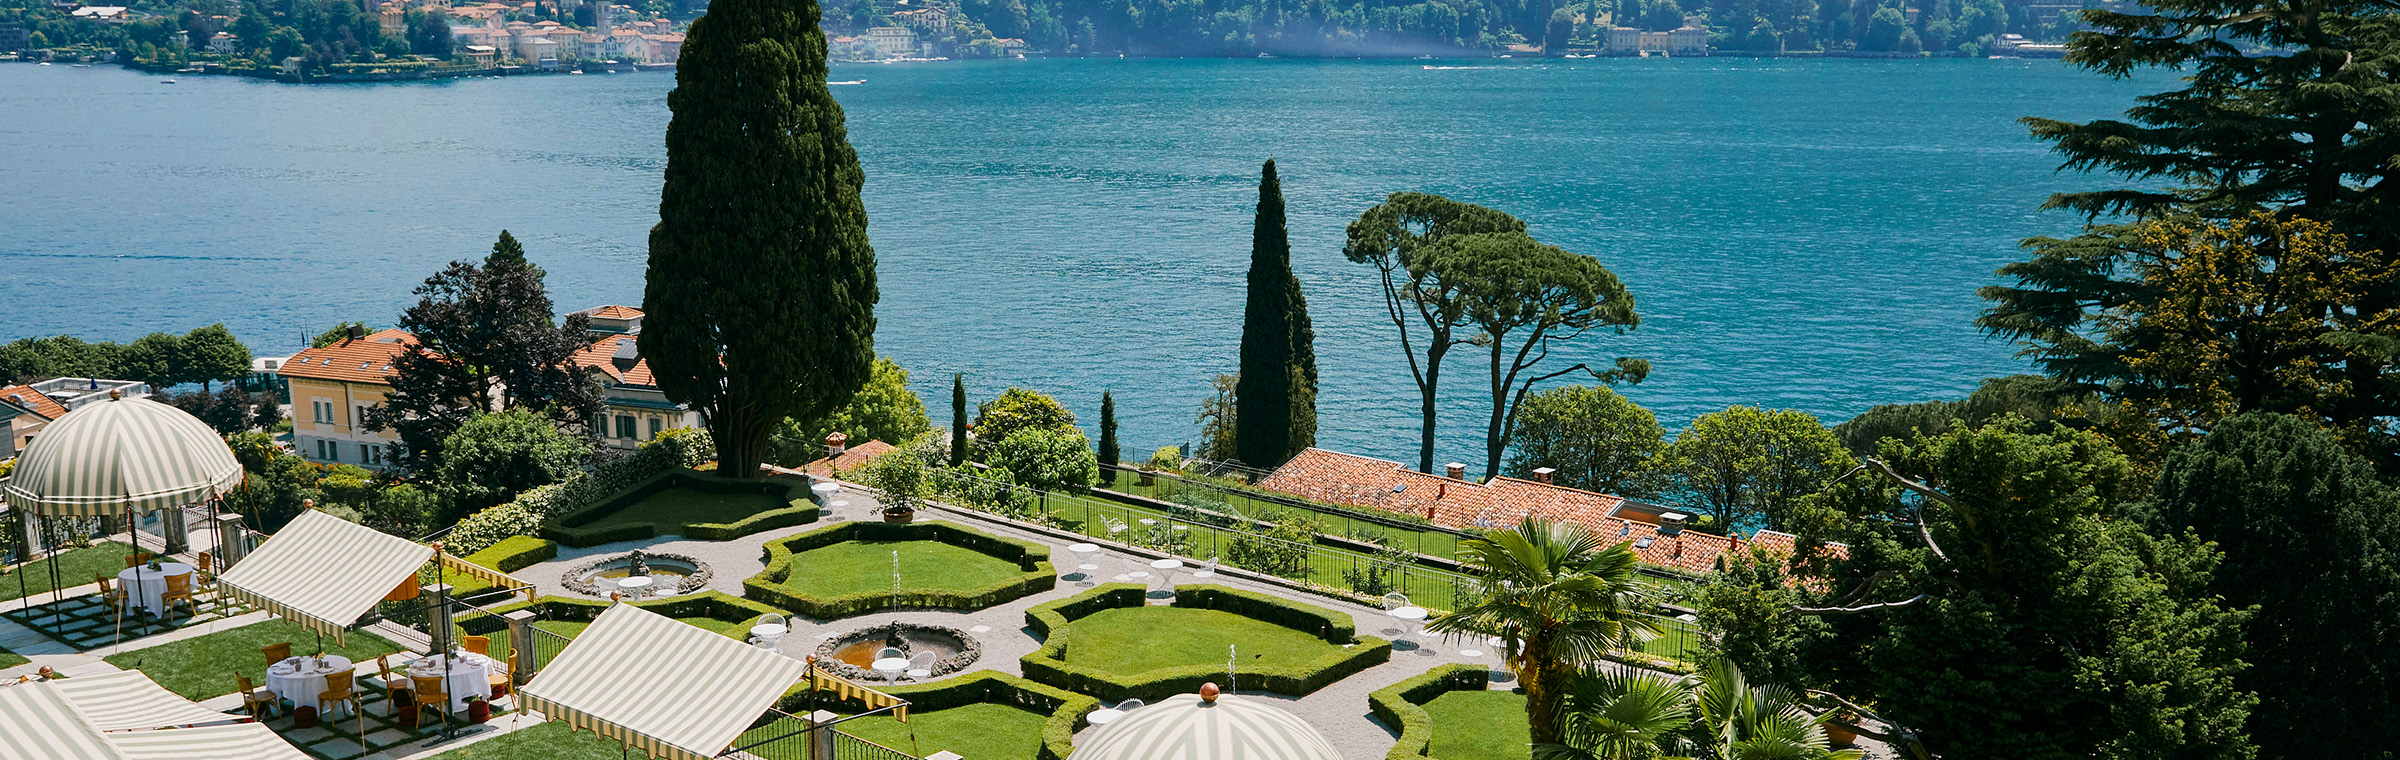 Passalacqua View of the grounds and Lake Como